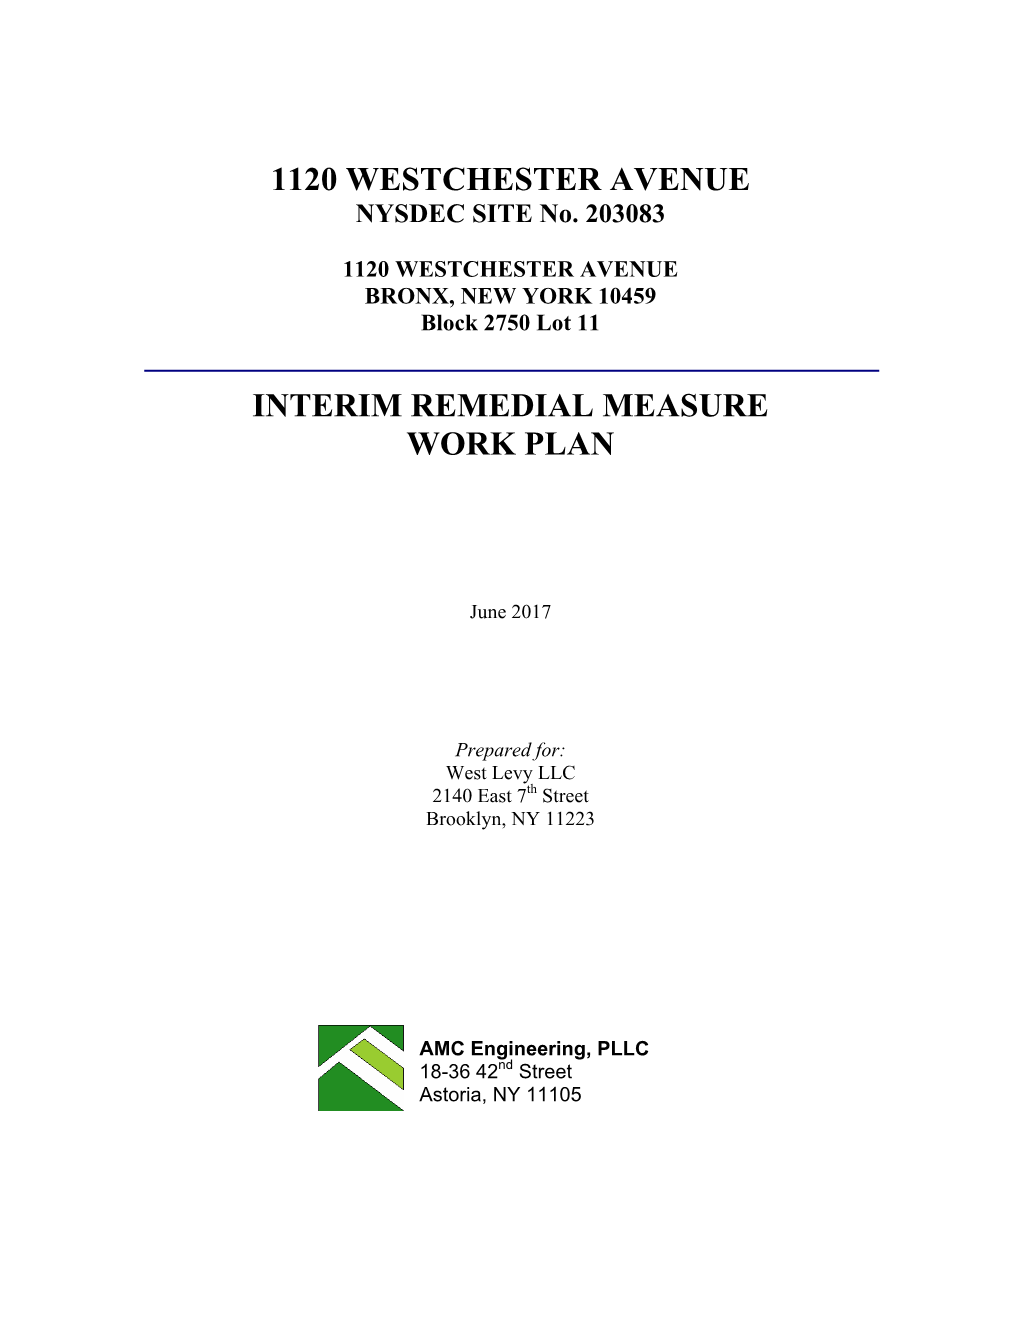 1120 Westchester Avenue Interim Remedial Measure